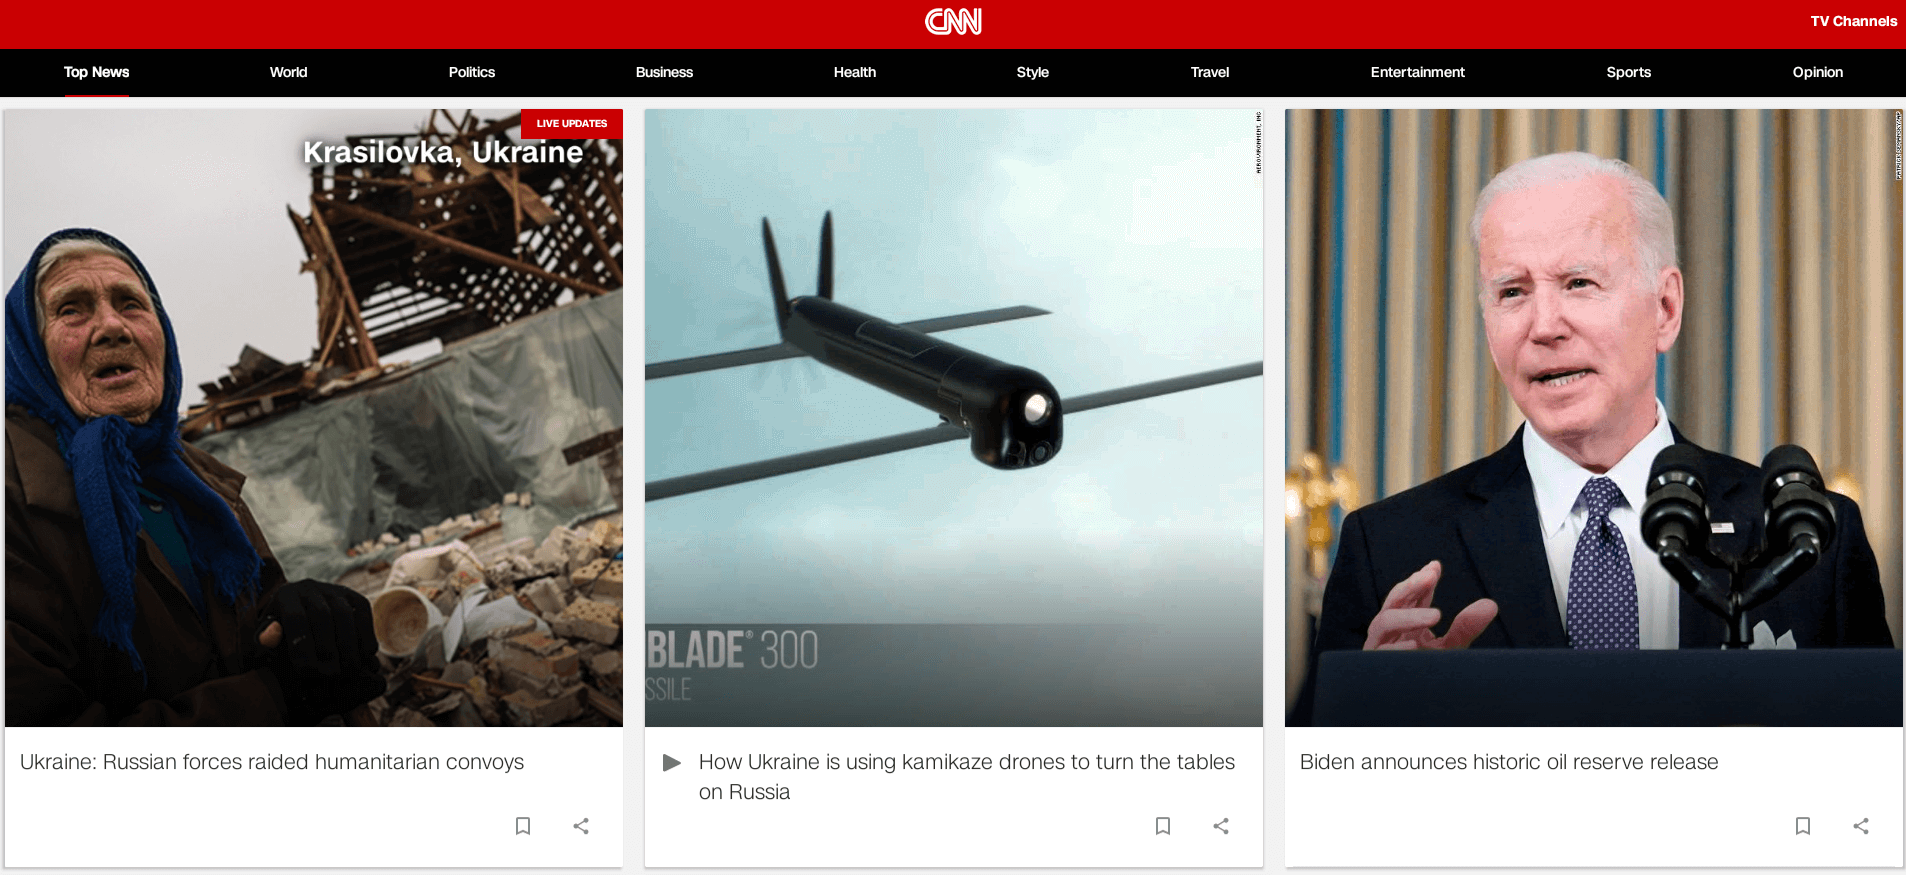 CNN Play Store app interface